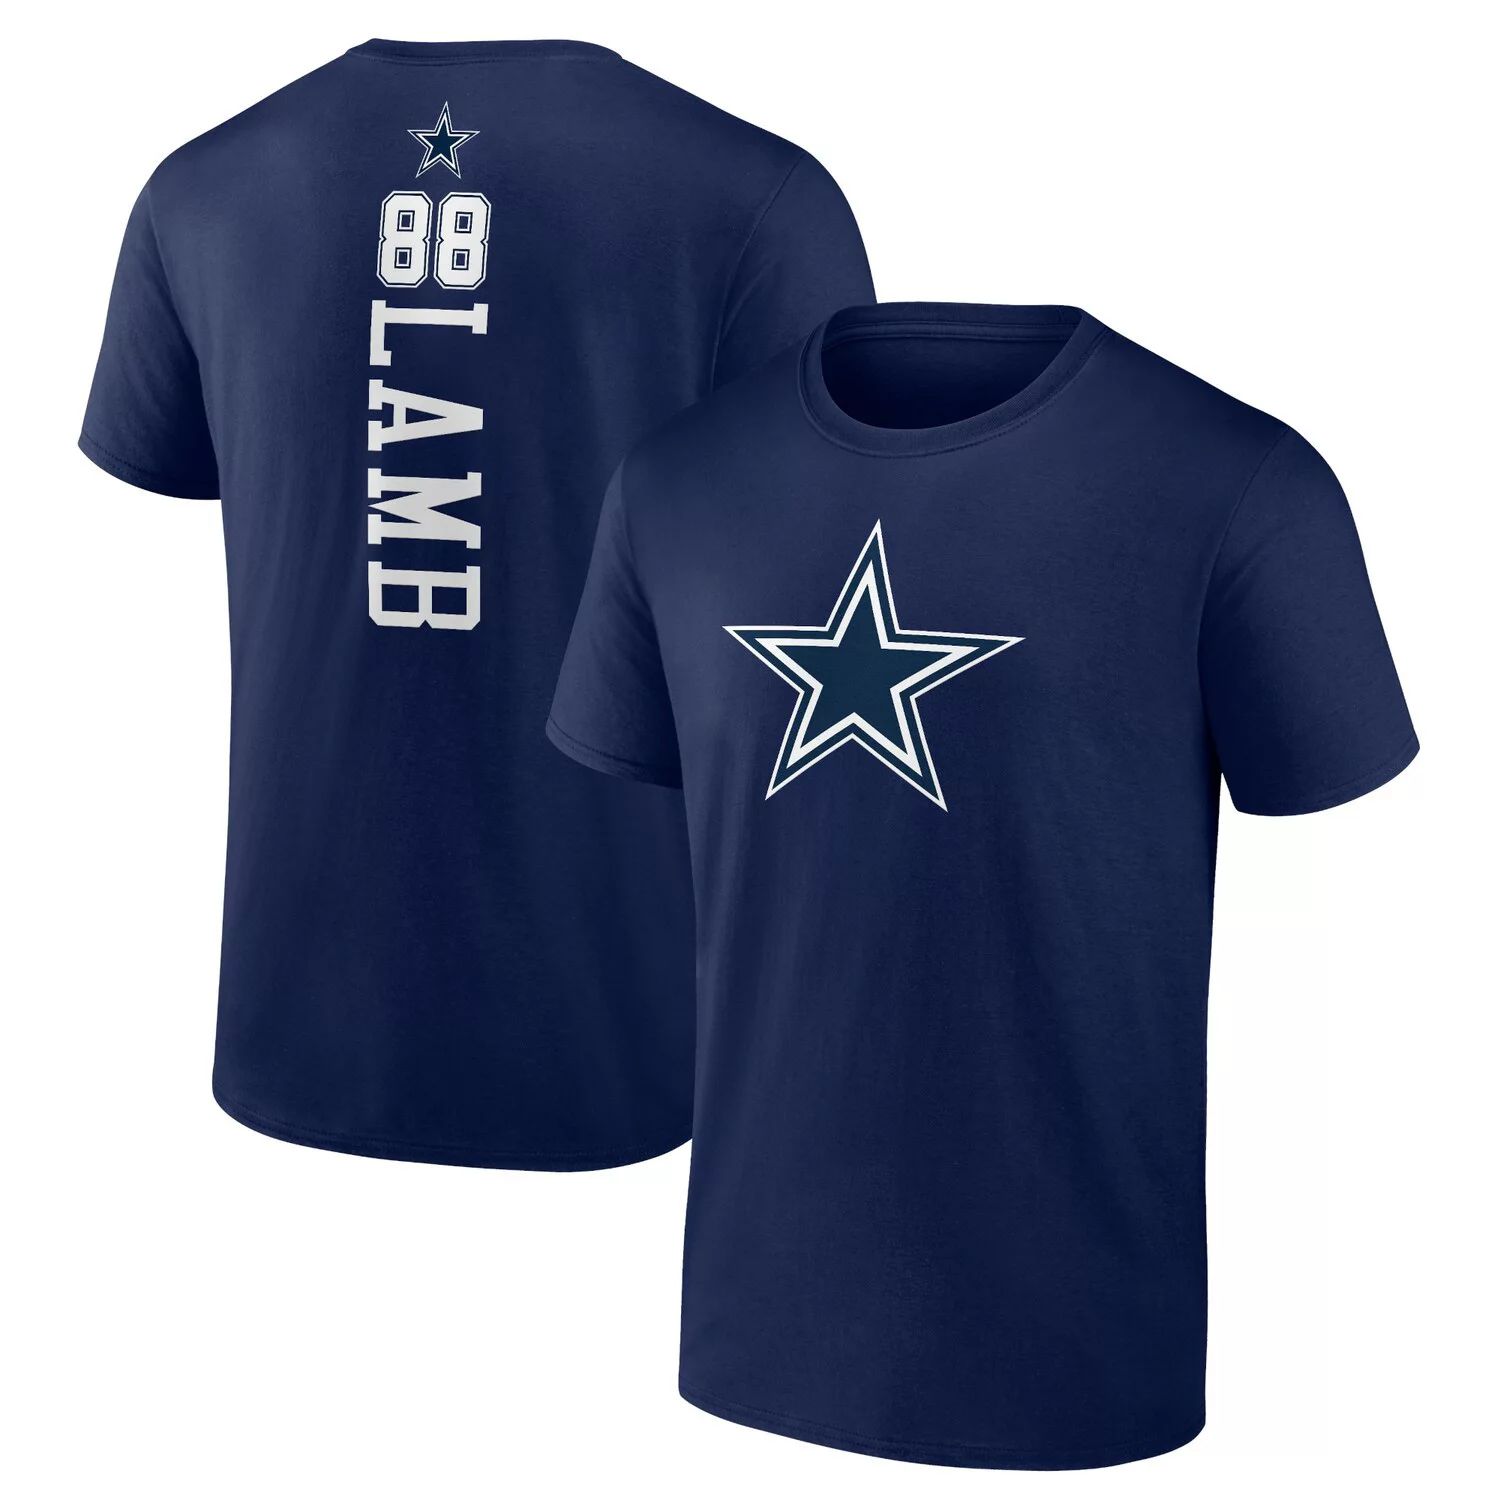 Мужская темно-синяя футболка Fanatics с логотипом CeeDee Lamb Dallas Cowboys Playmaker